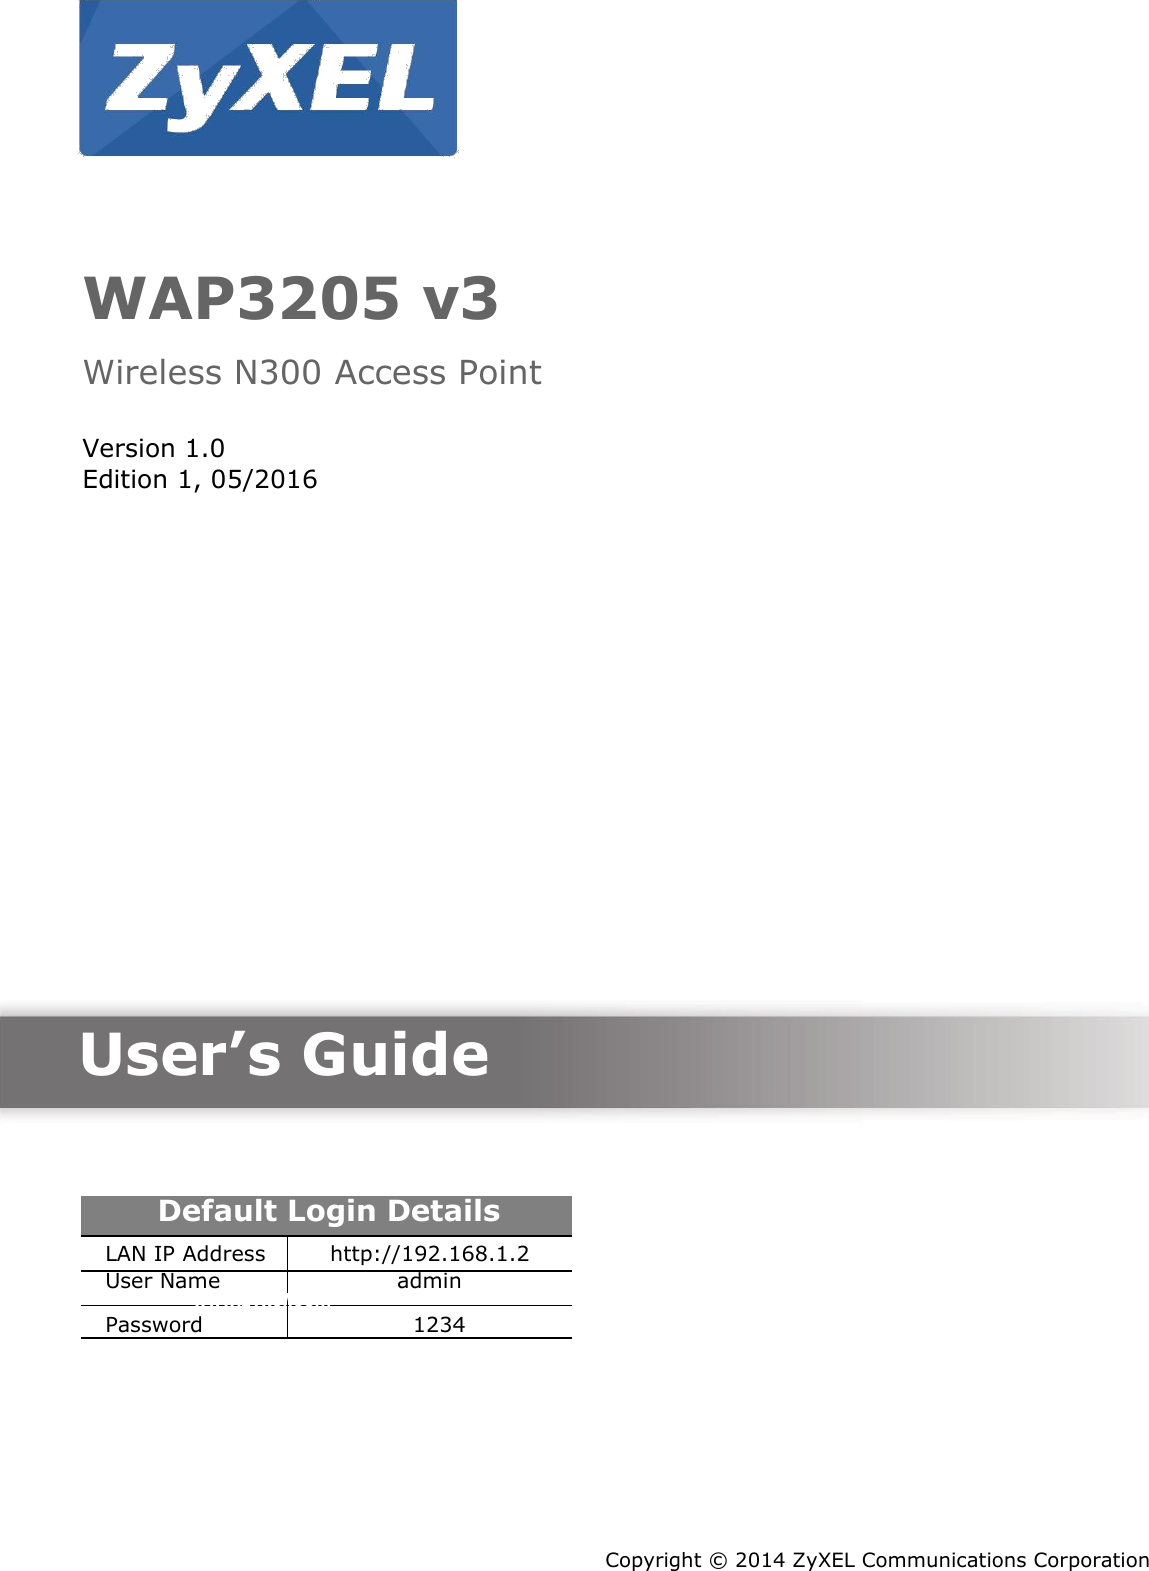      WAP3205 v3  Wireless N300 Access Point  Version 1.0 Edition 1, 05/2016                Quick Start Guide       User’s Guide      Default Login Details  LAN IP Address http://192.168.1.2      User Name  admin  www.zyxel.com 1234  Password             Copyright ©  2014 ZyXEL Communications Corporation 